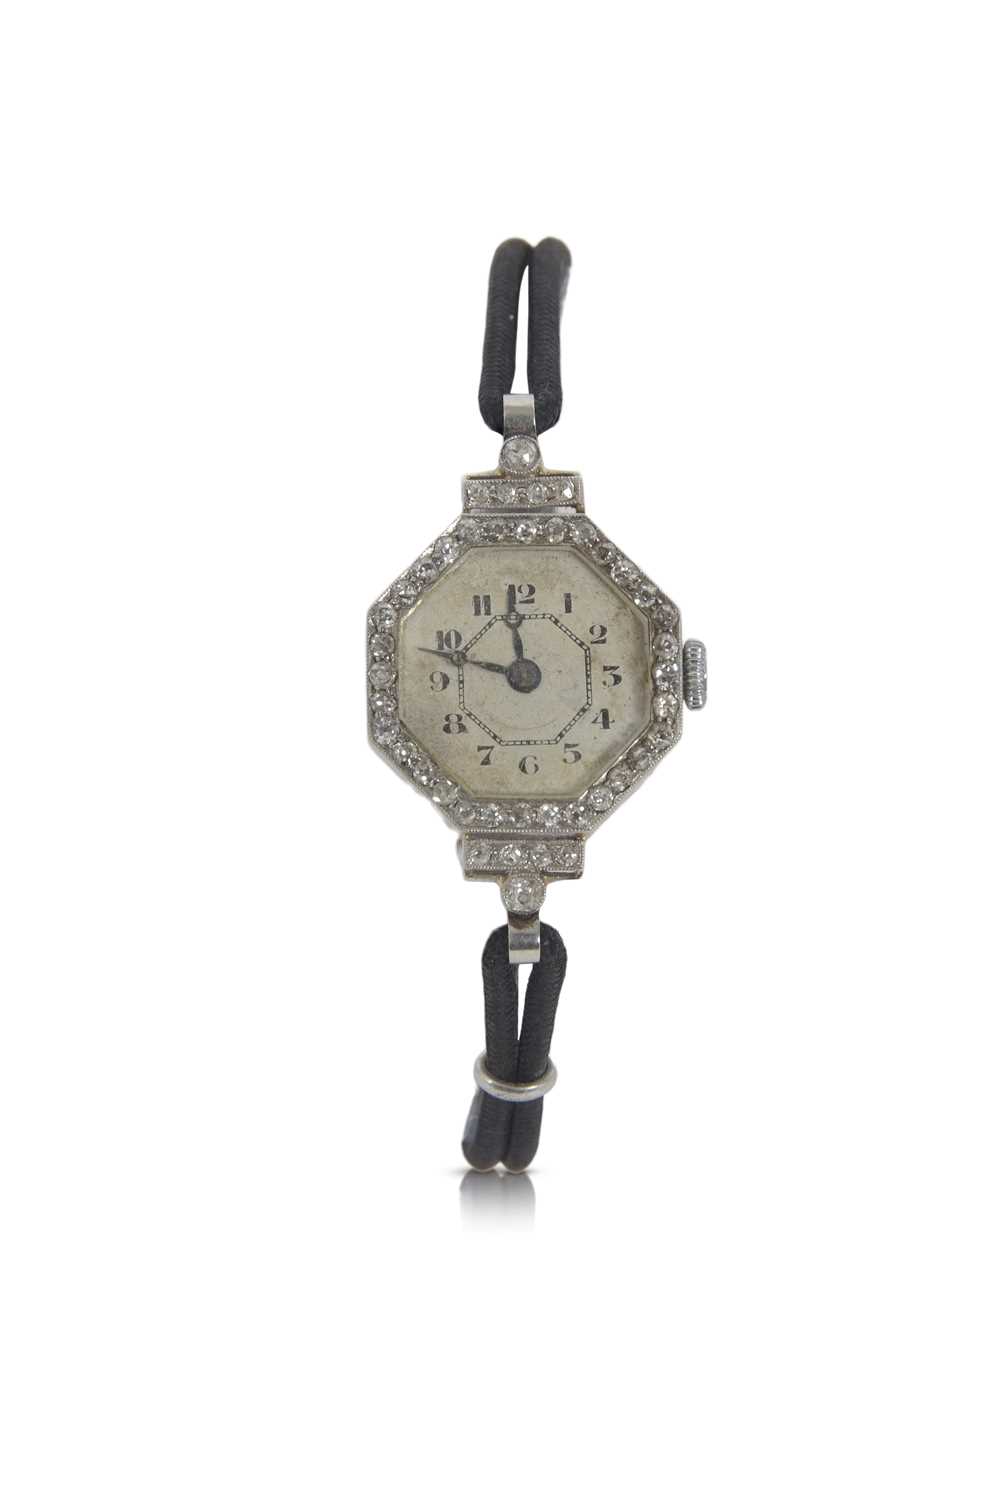 An Art Deco precious metal ladies wristwatch with old cut diamond bezel surround, it has a crown